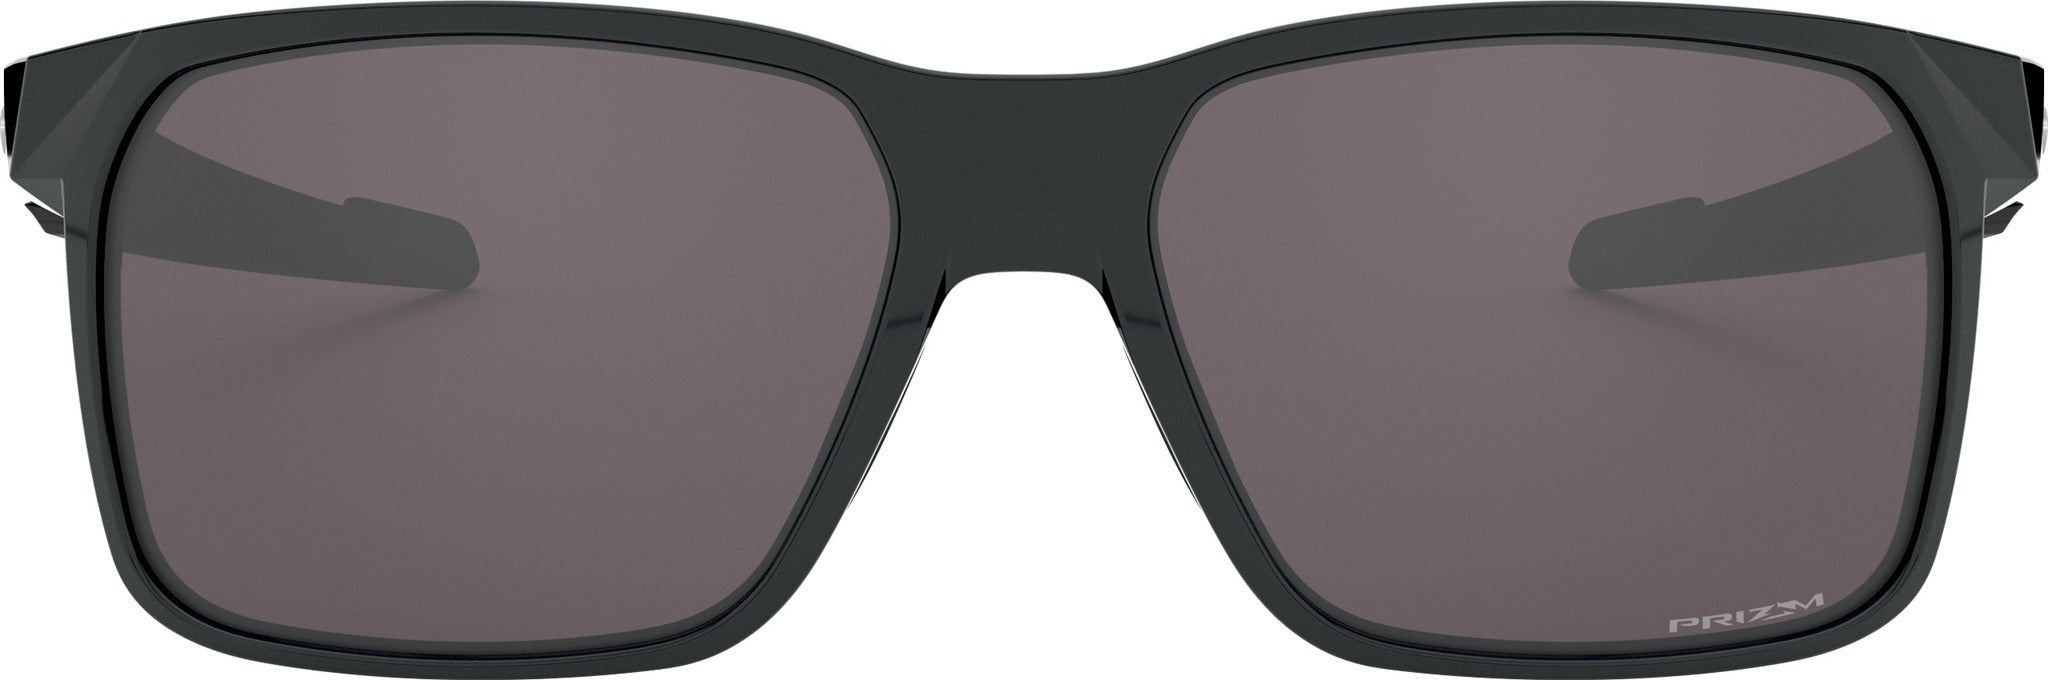 Oakley Portal X Sunglasses - Carbon - Prizm Grey Lens | Altitude Sports